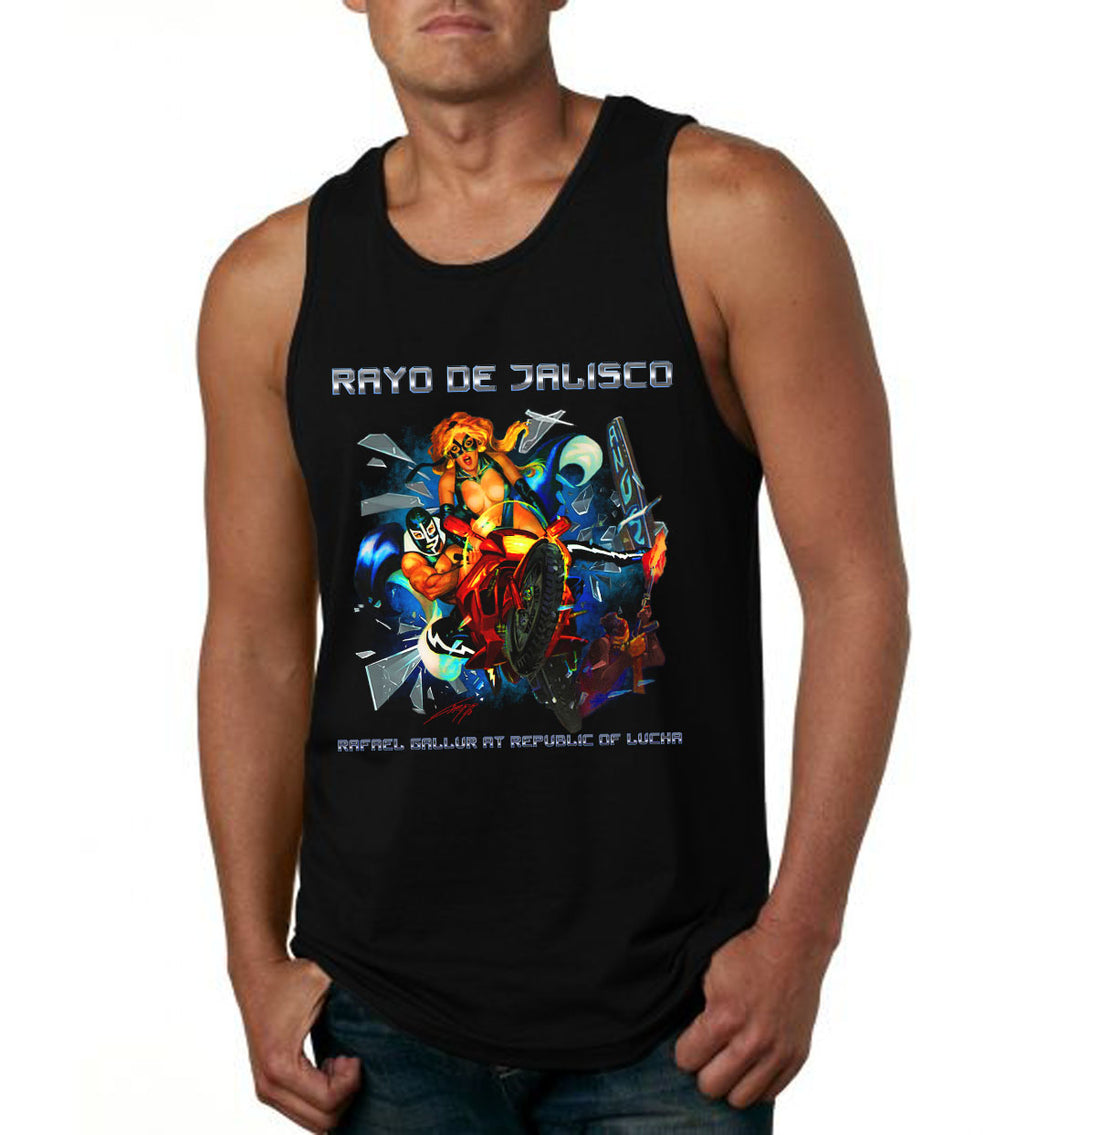 RAYO DE JALISCO Rafael Gallur t-shirt